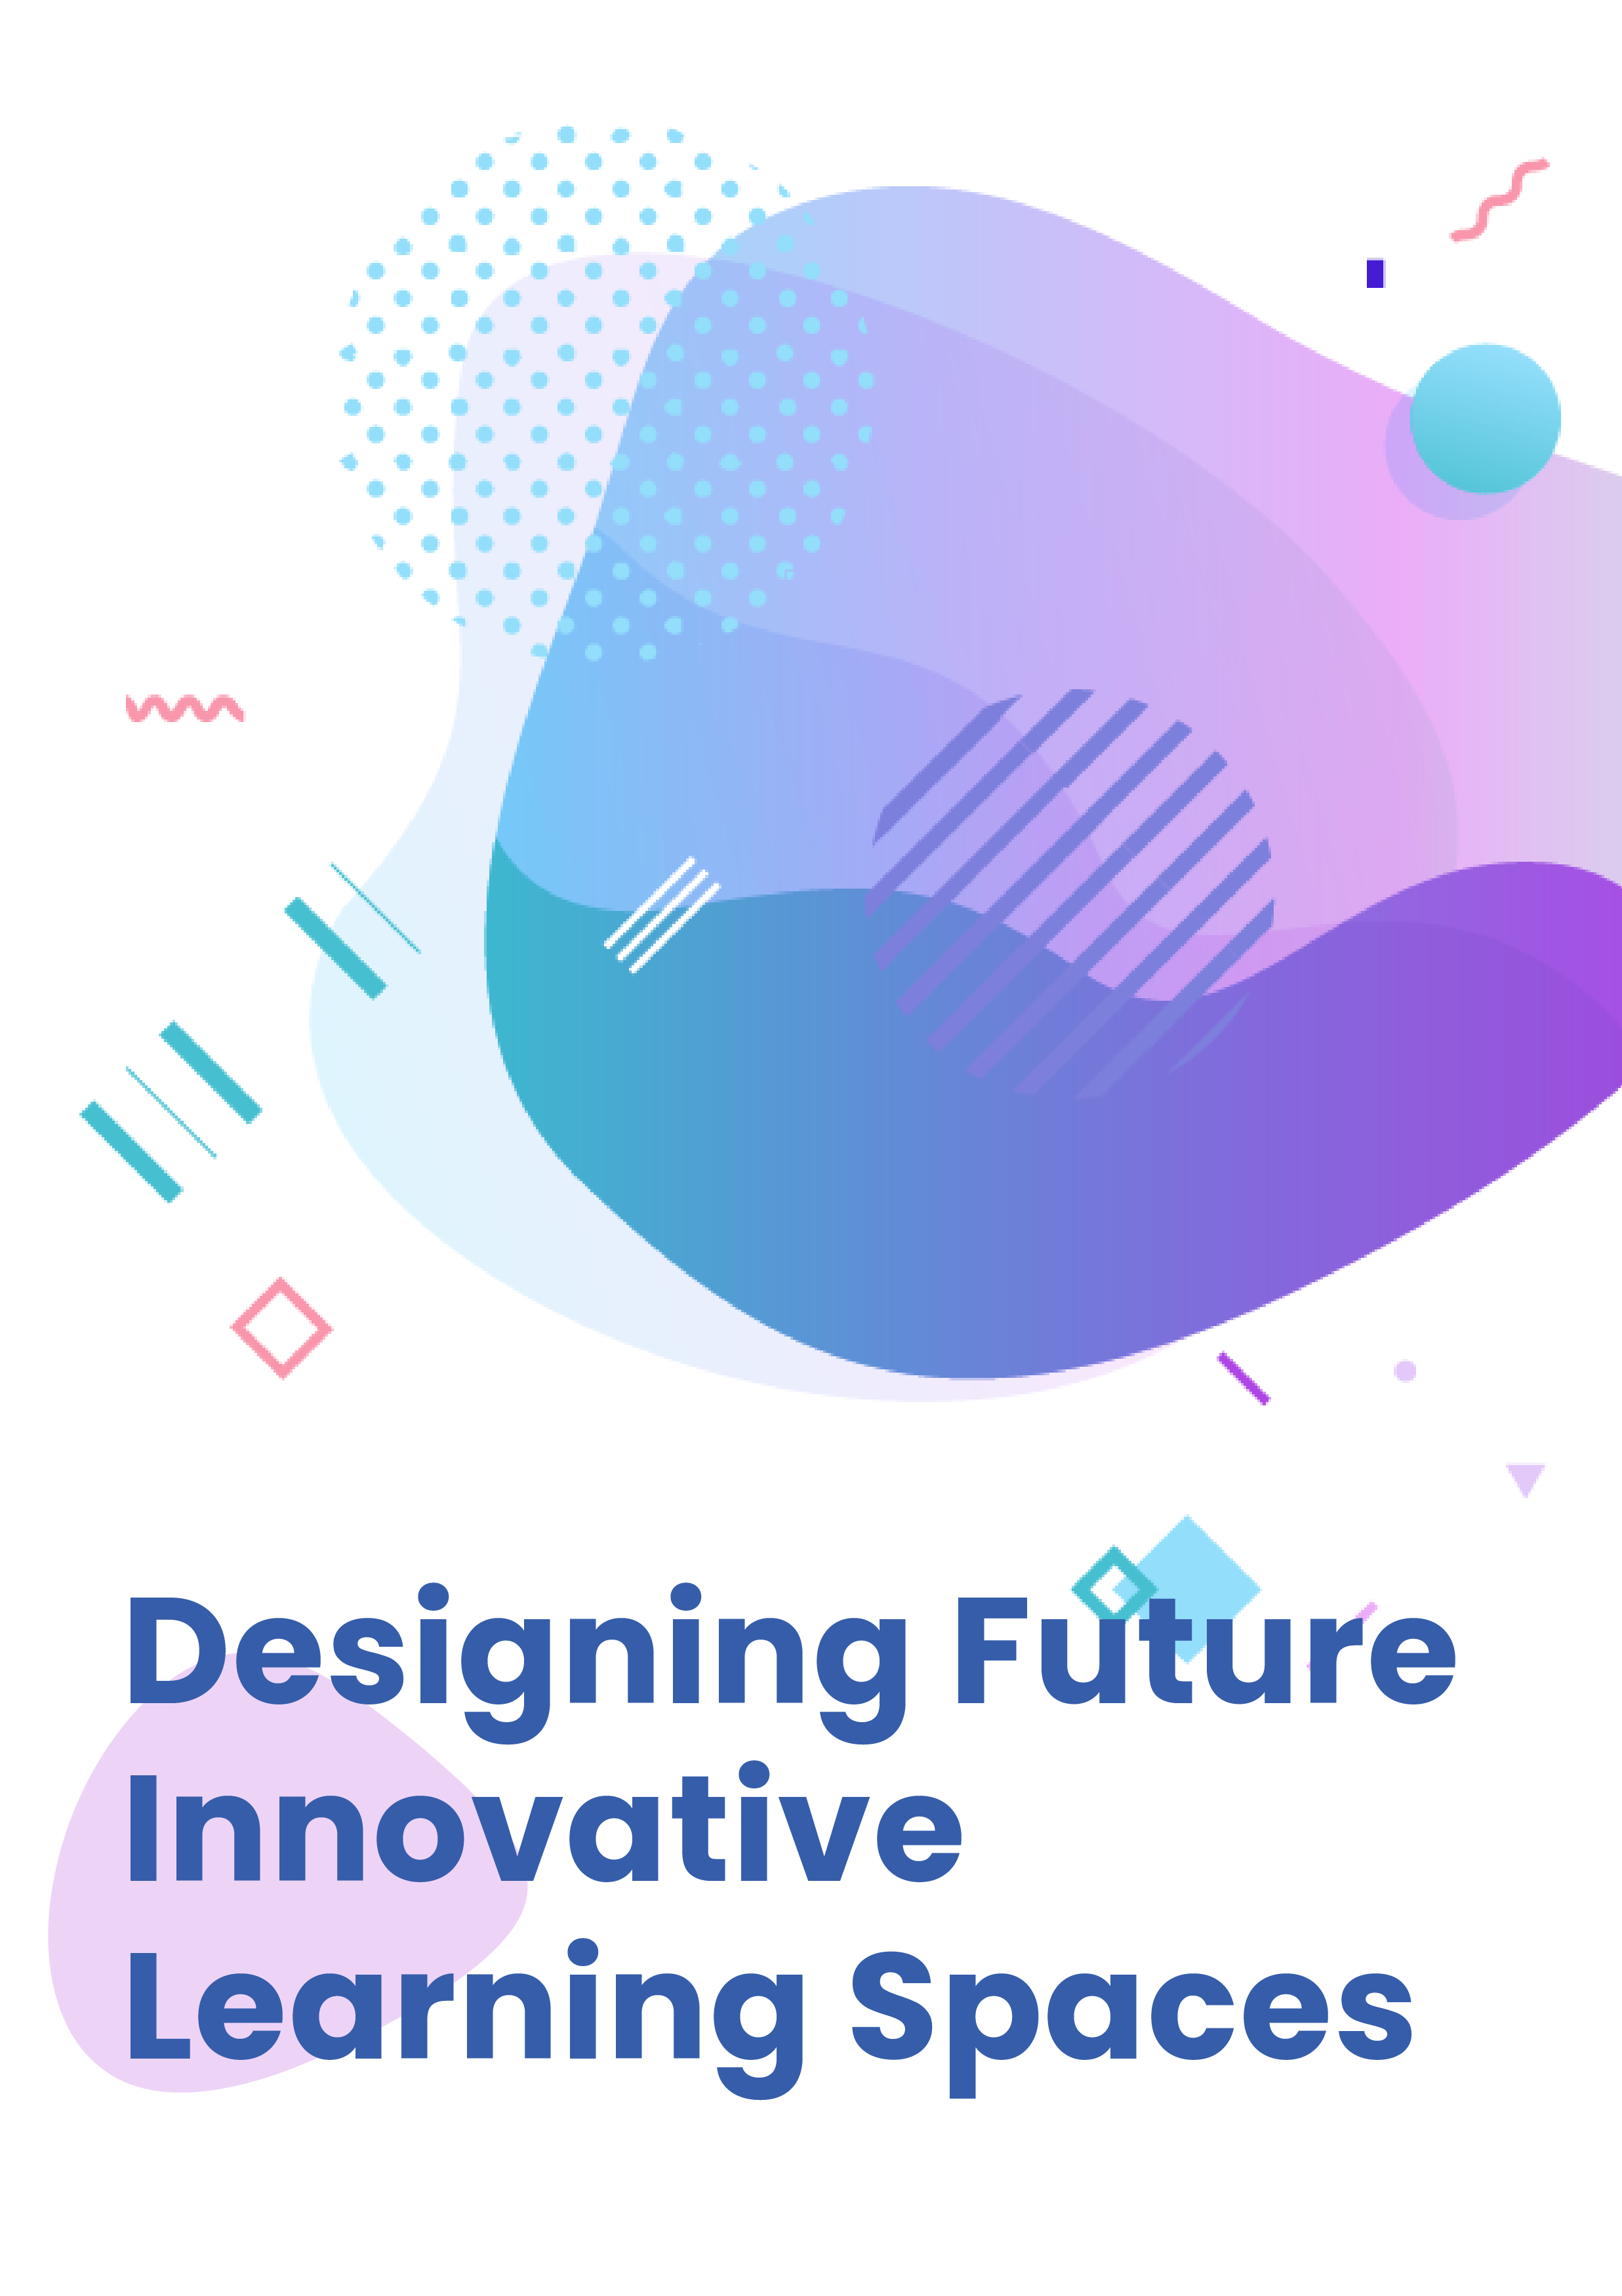 Designing Future Innovative Learning Spaces (DesignFILS) - CZ